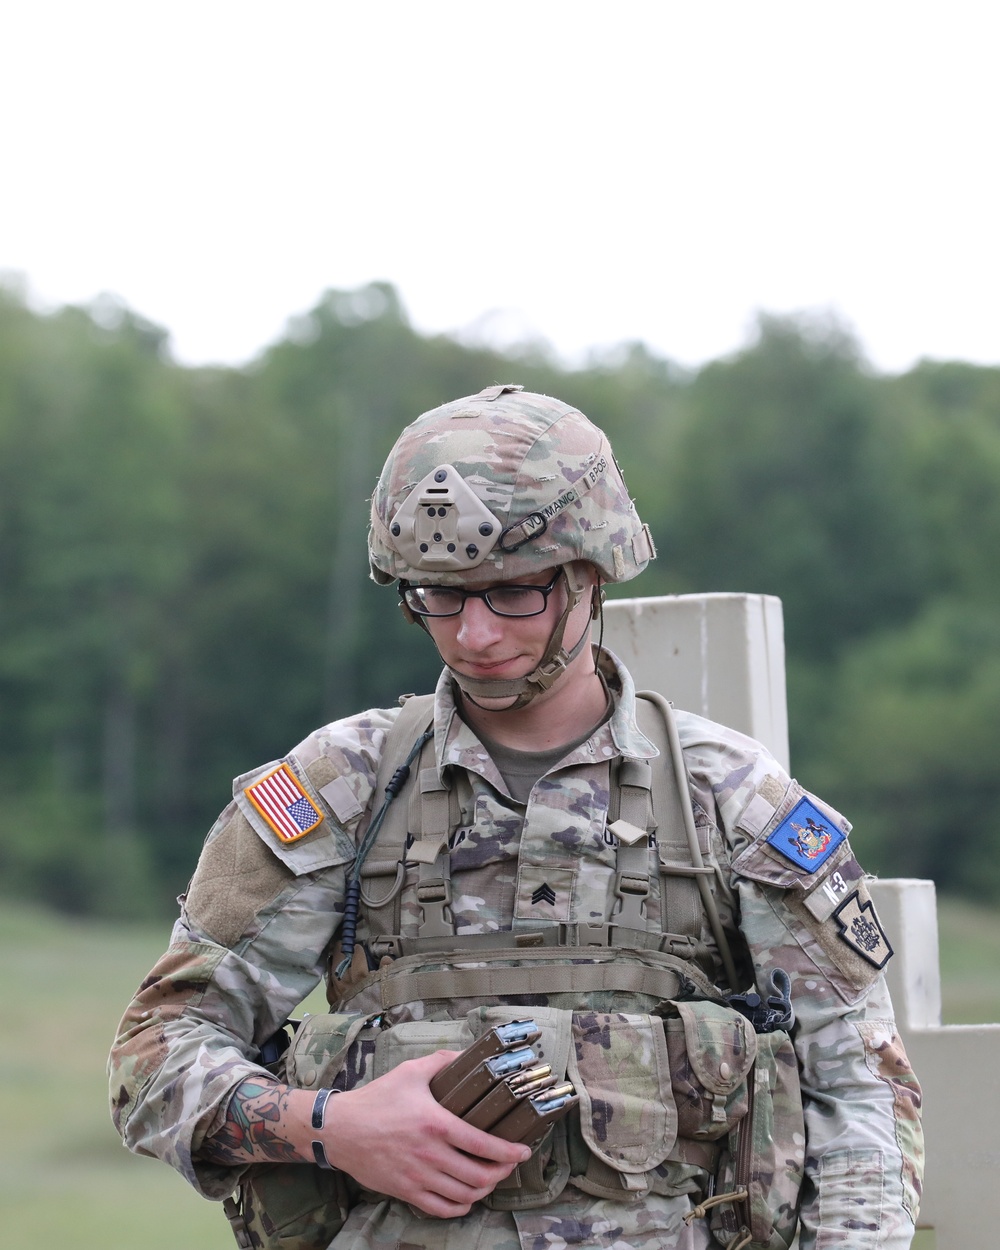 Pennsylvania Army Combat Engineer prepares for M4 weapons qualificaiton